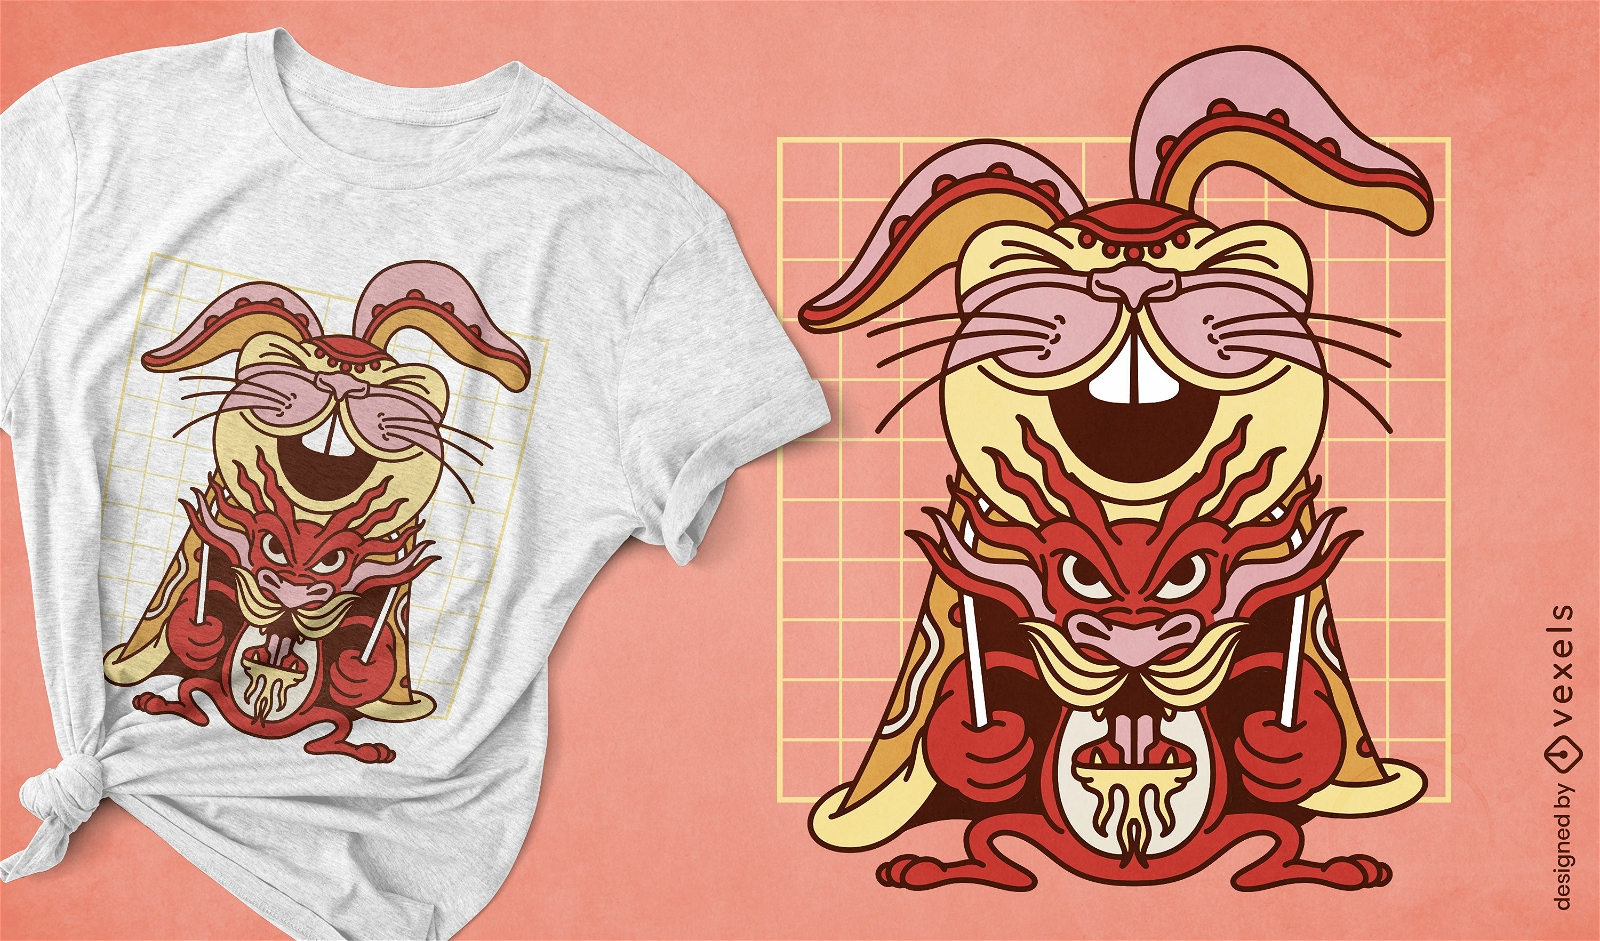 Chinese new year dragon and rabbit costume t-shirt design